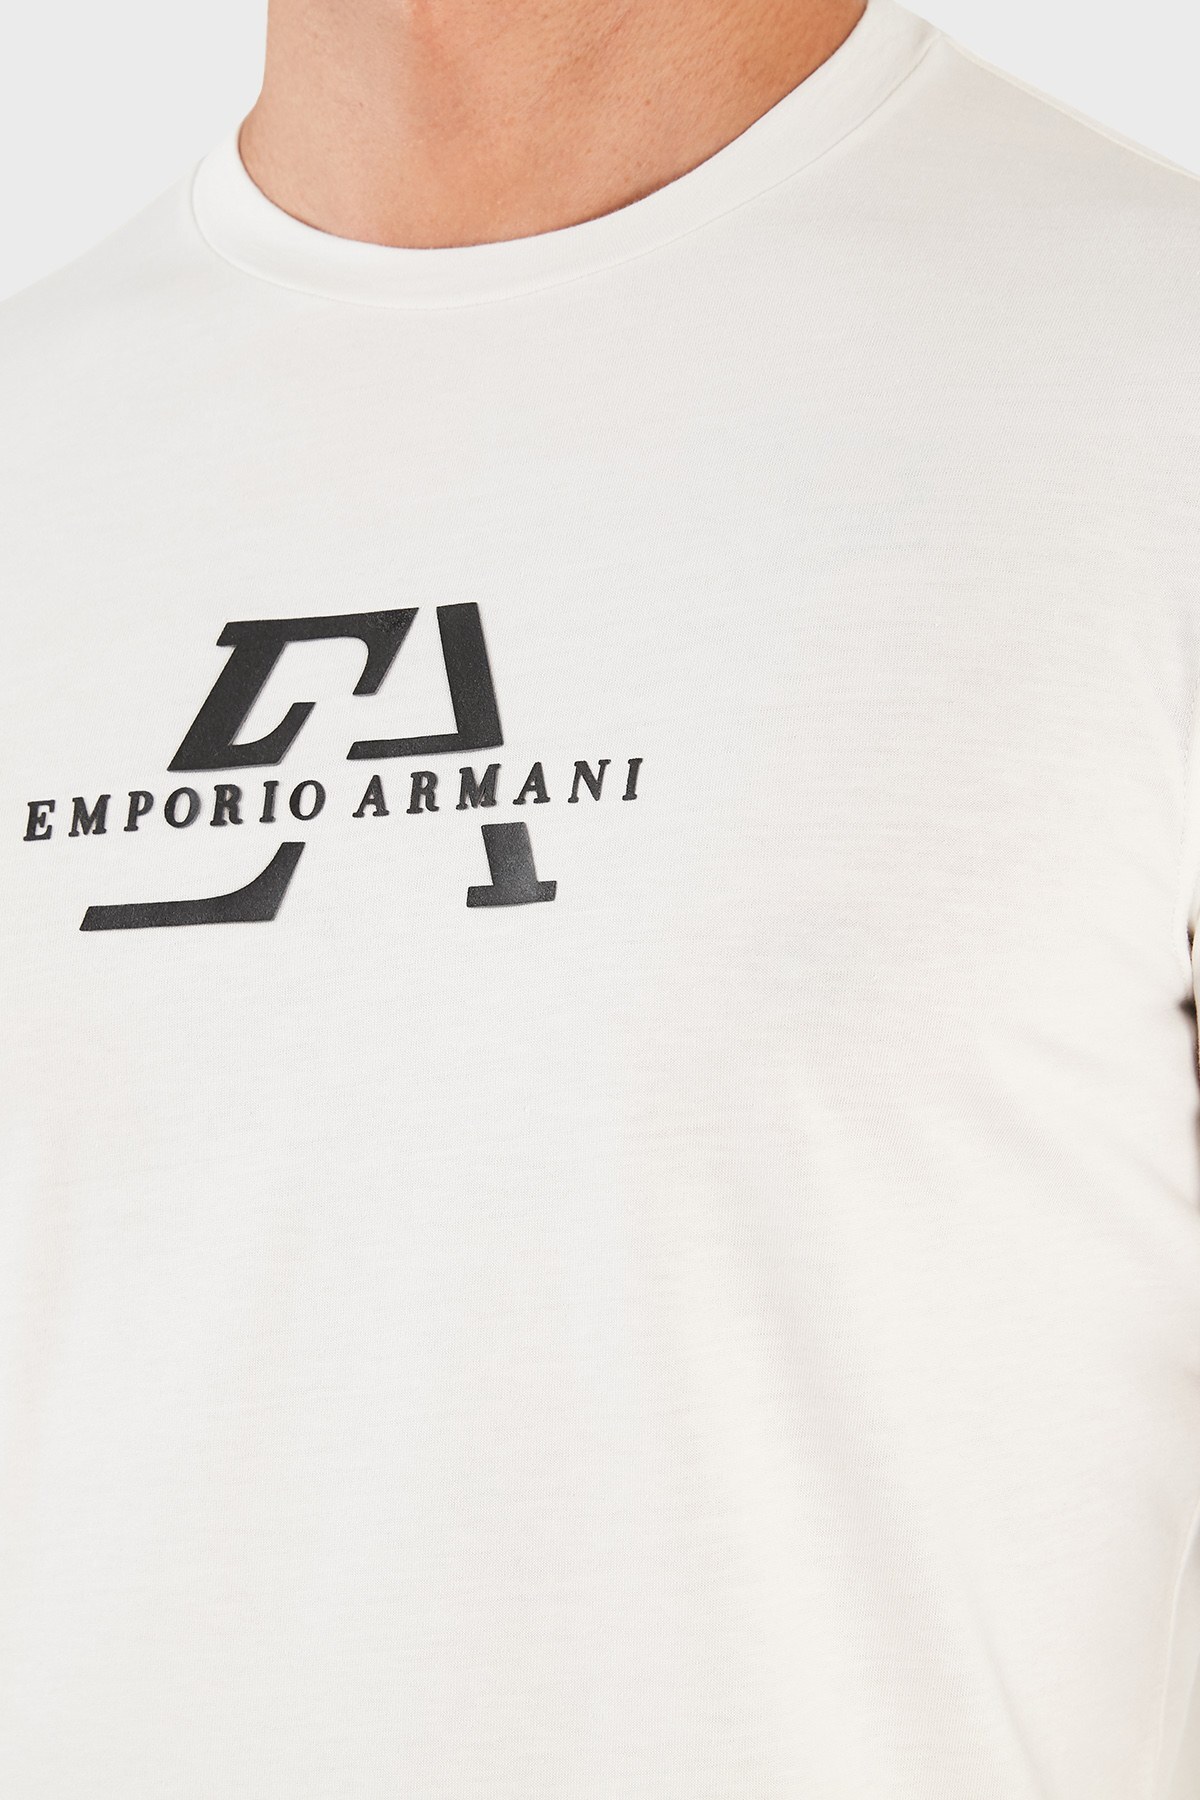 Emporio Armani Logo Baskılı Bisiklet Yaka % 100 Pamuk Erkek T Shirt S 3K1TL7 1JULZ 0101 BEYAZ